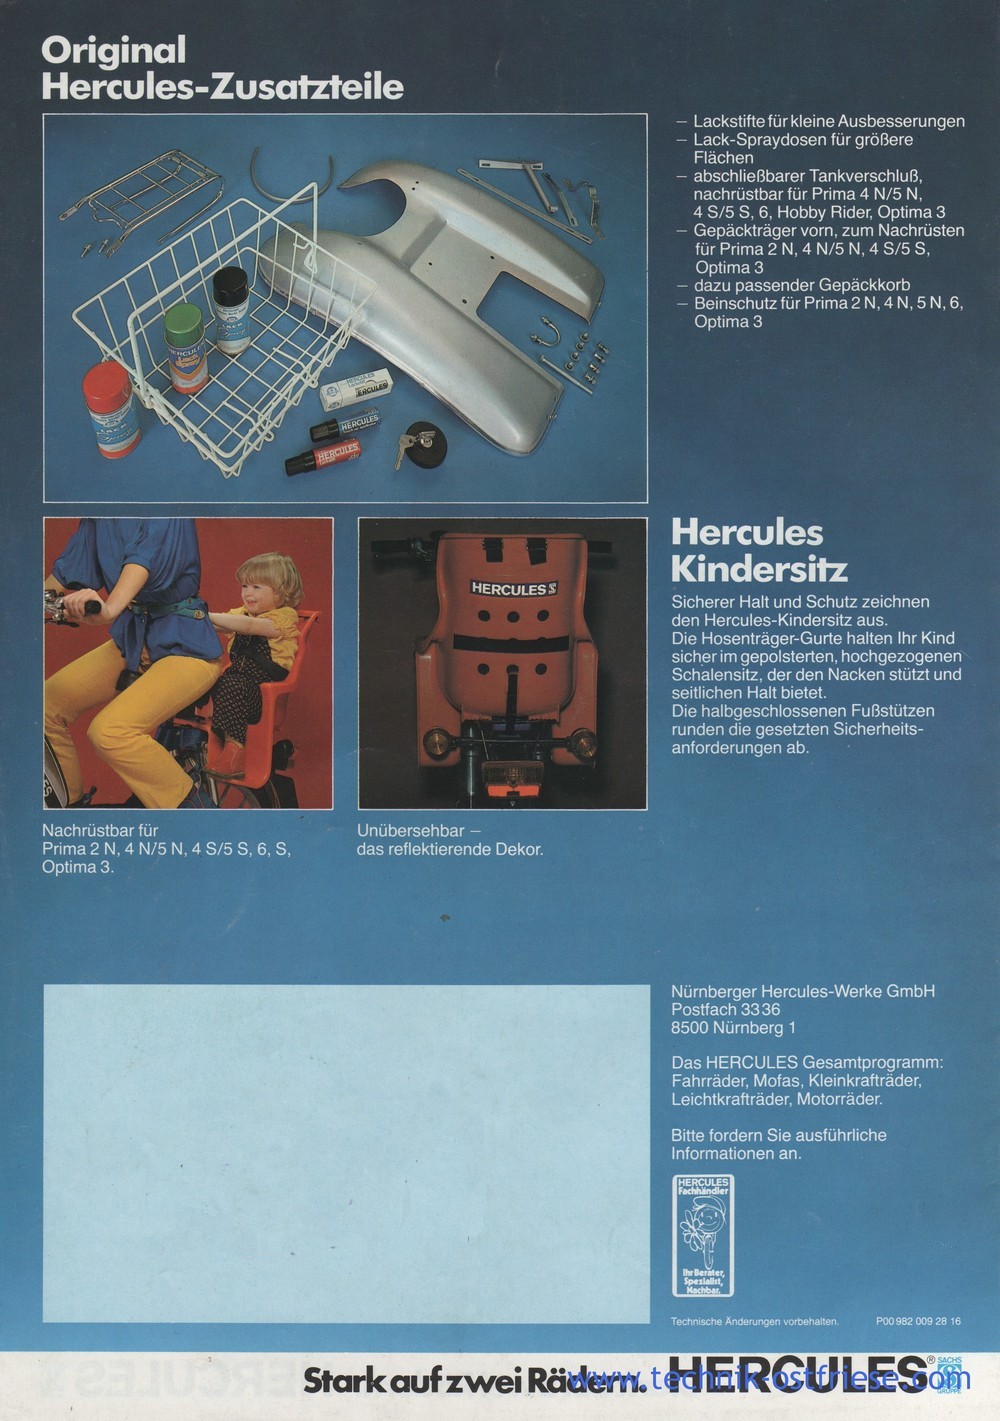 Original Hercules-Zusatzteile
